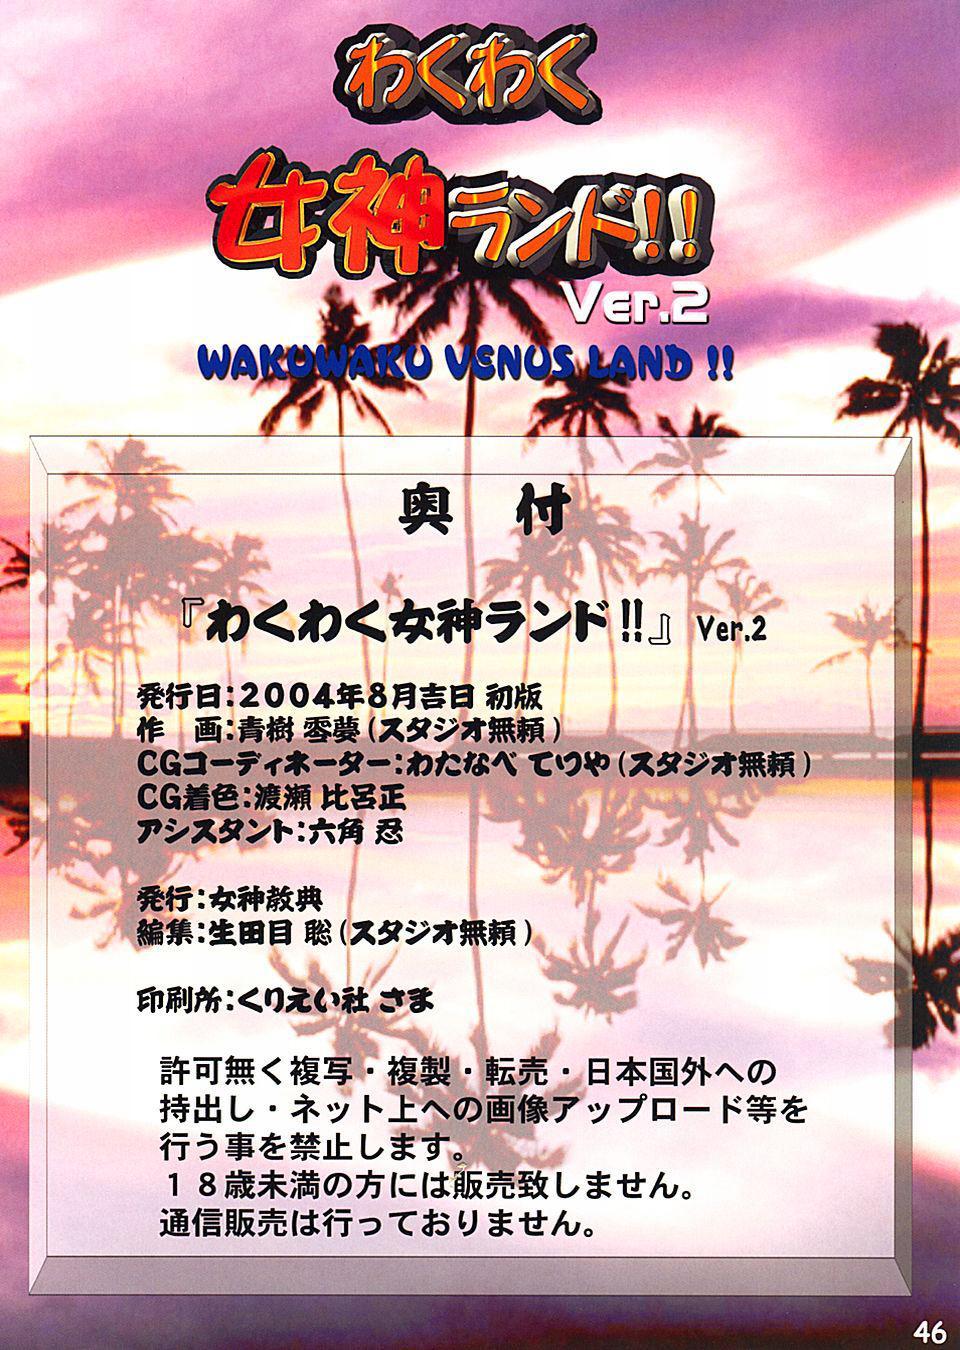 Dead or Alive - Waku Waku Venus Land Ver.2 43